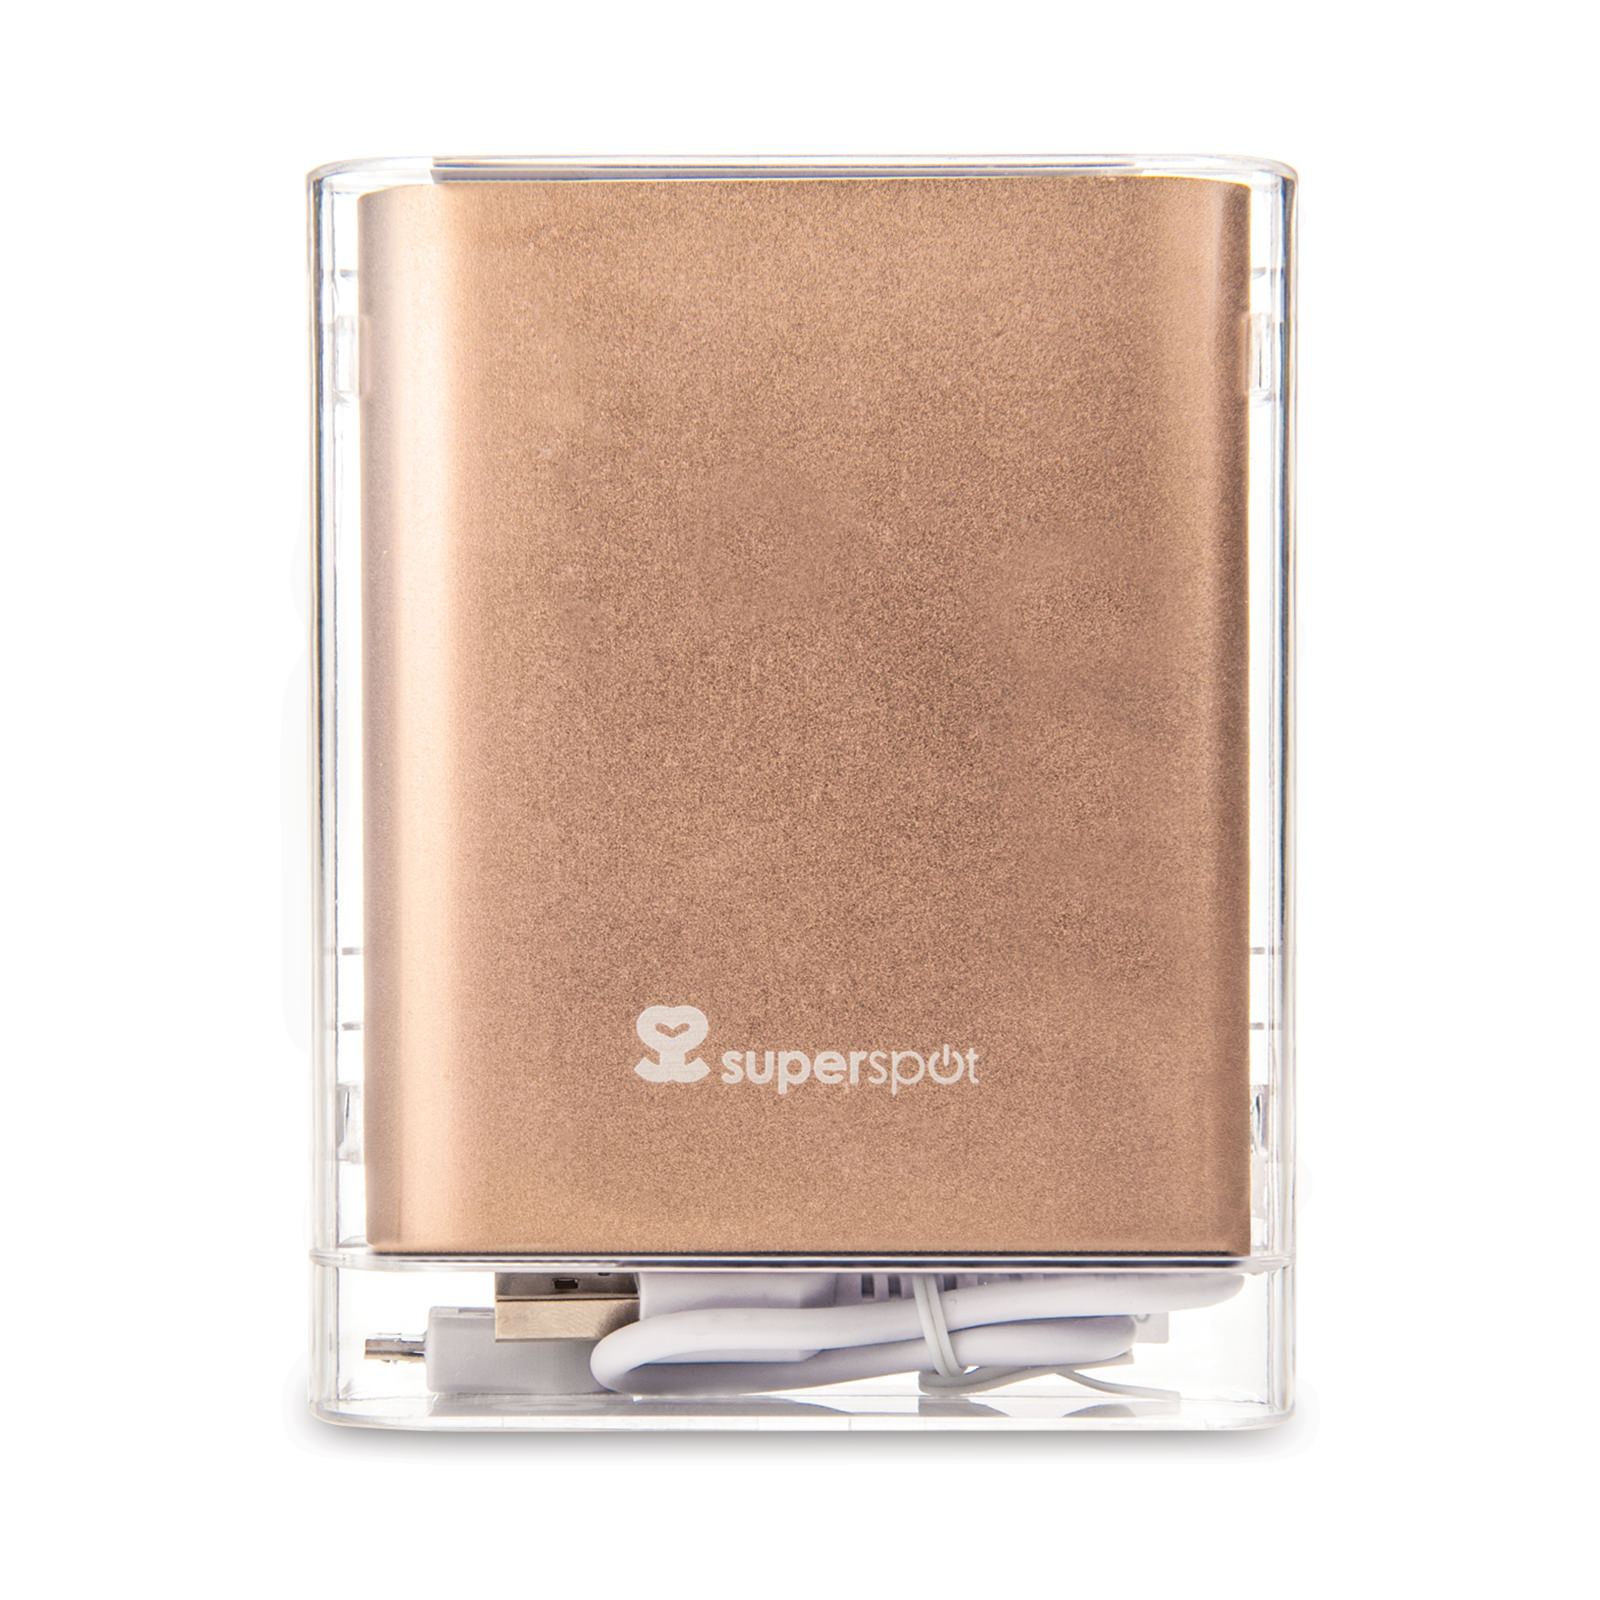 SuperSpot 10400 mAh Powerbank - Gold